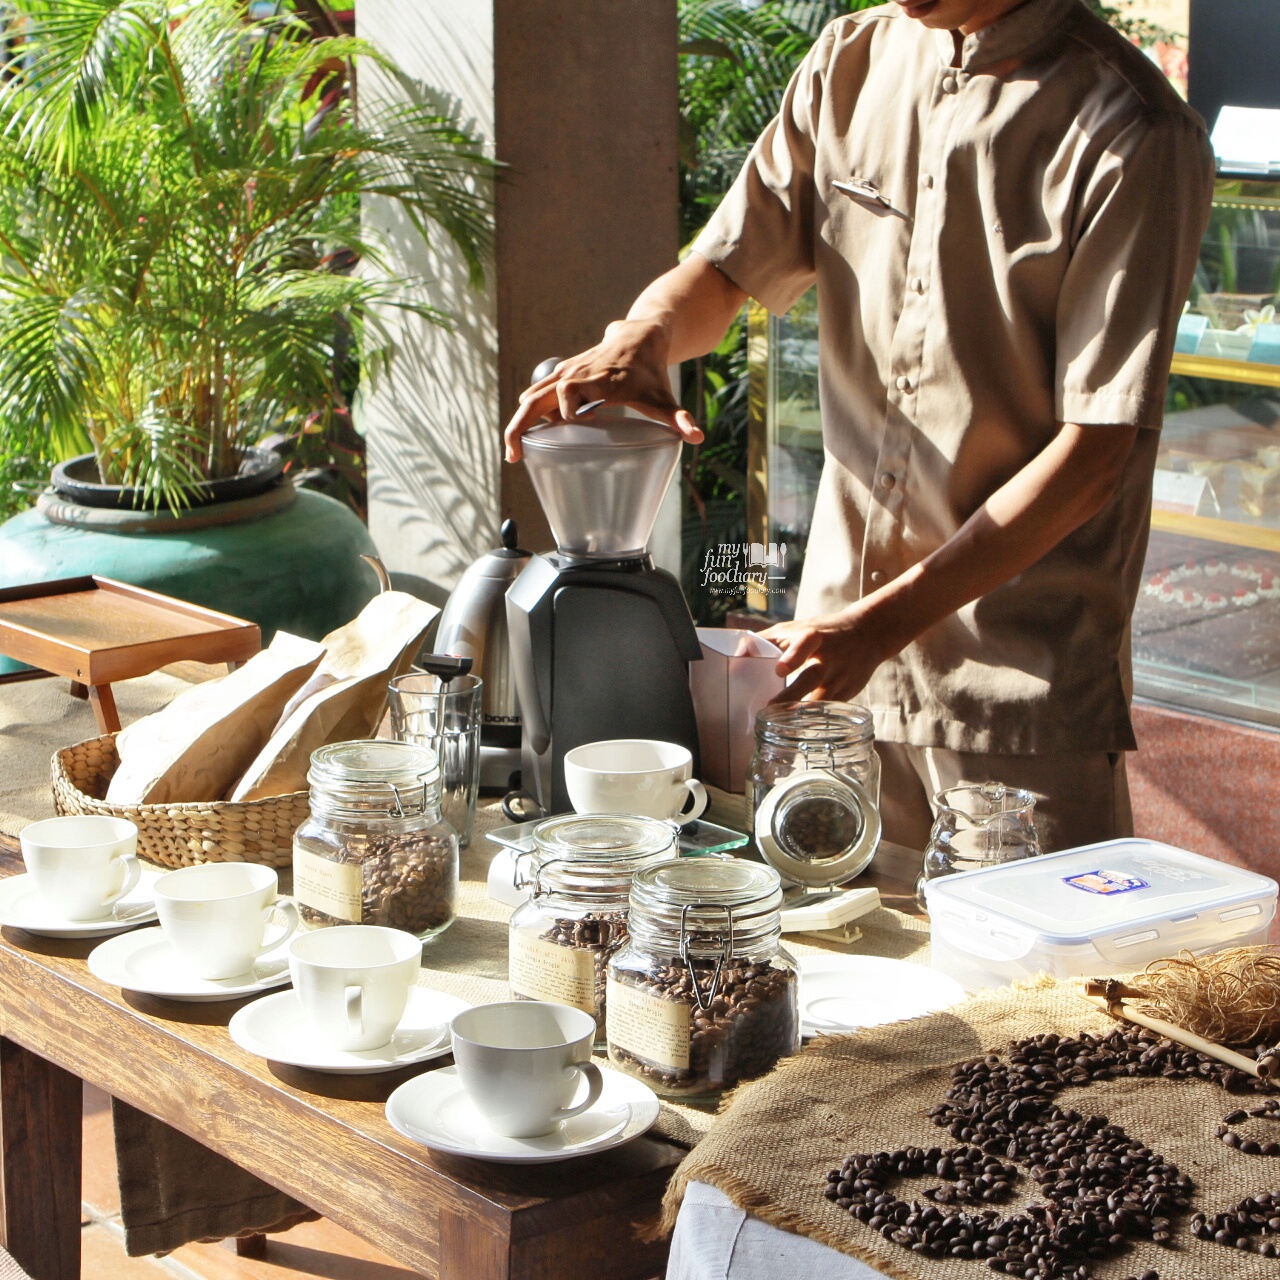 Preparation for Coffee Session at Petani Restaurant - Alaya Resort Ubud by Myfunfoodiary